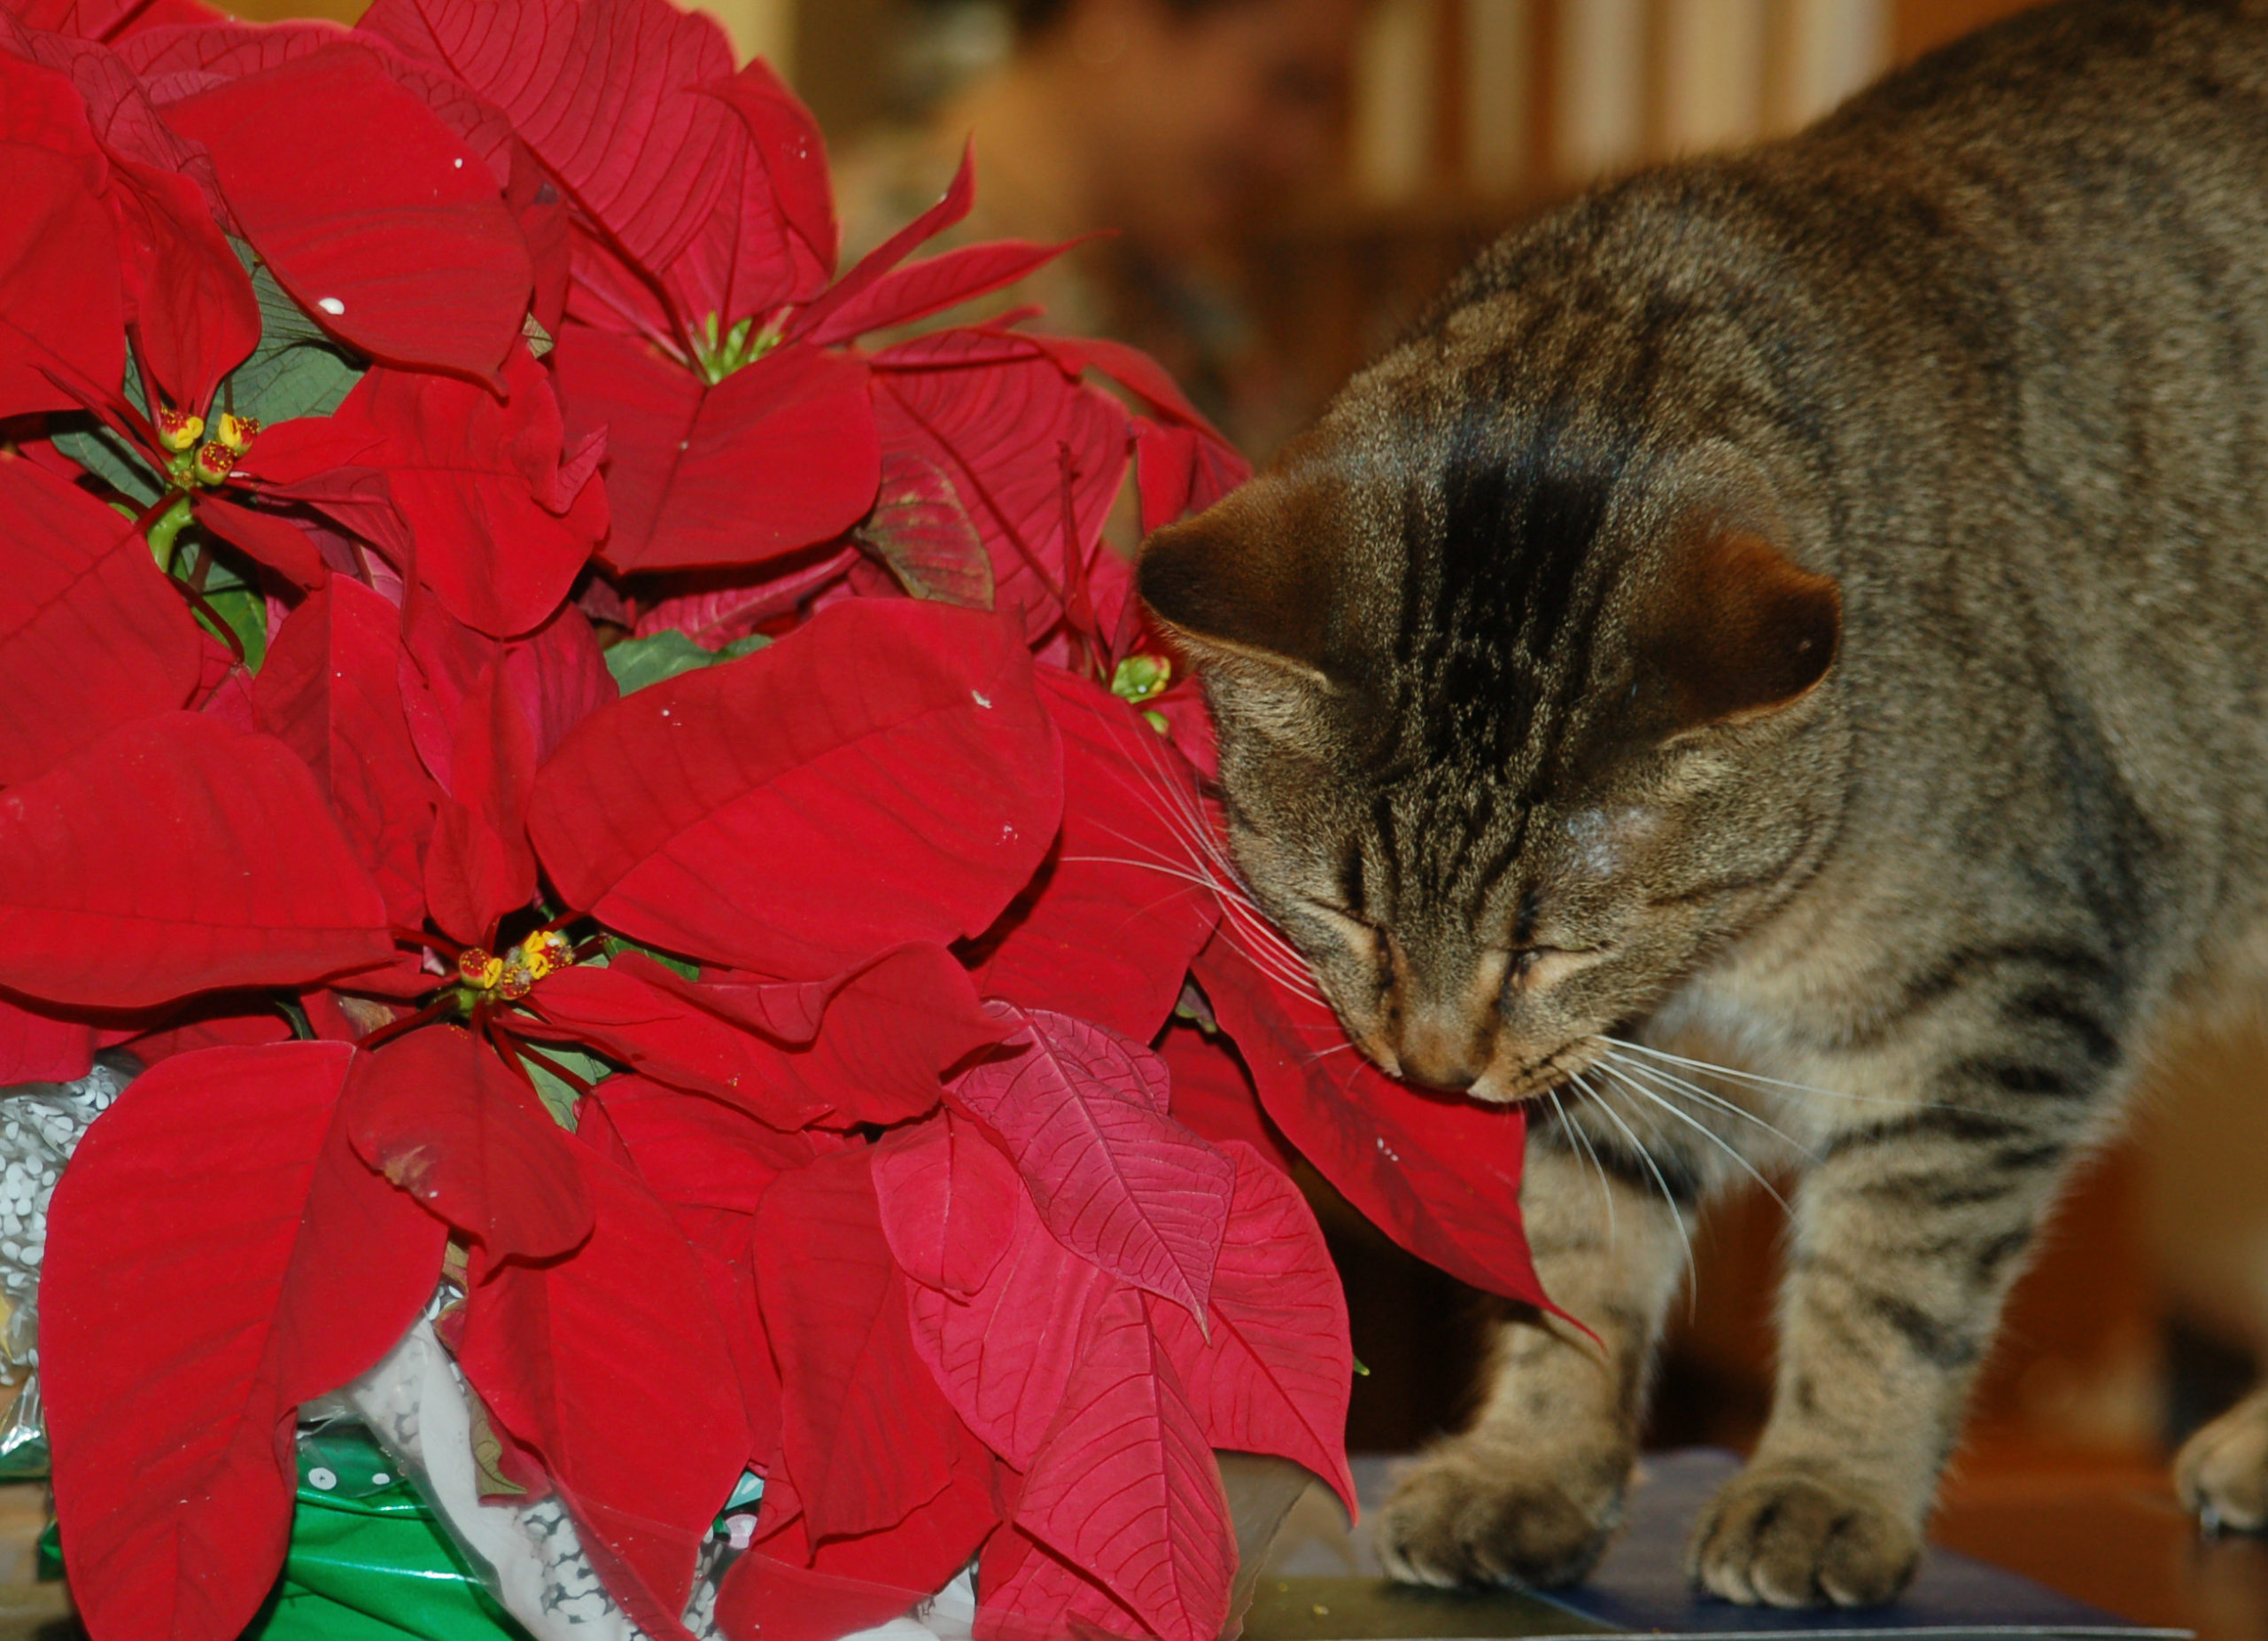 Clinck the cat biting a red plant leaf